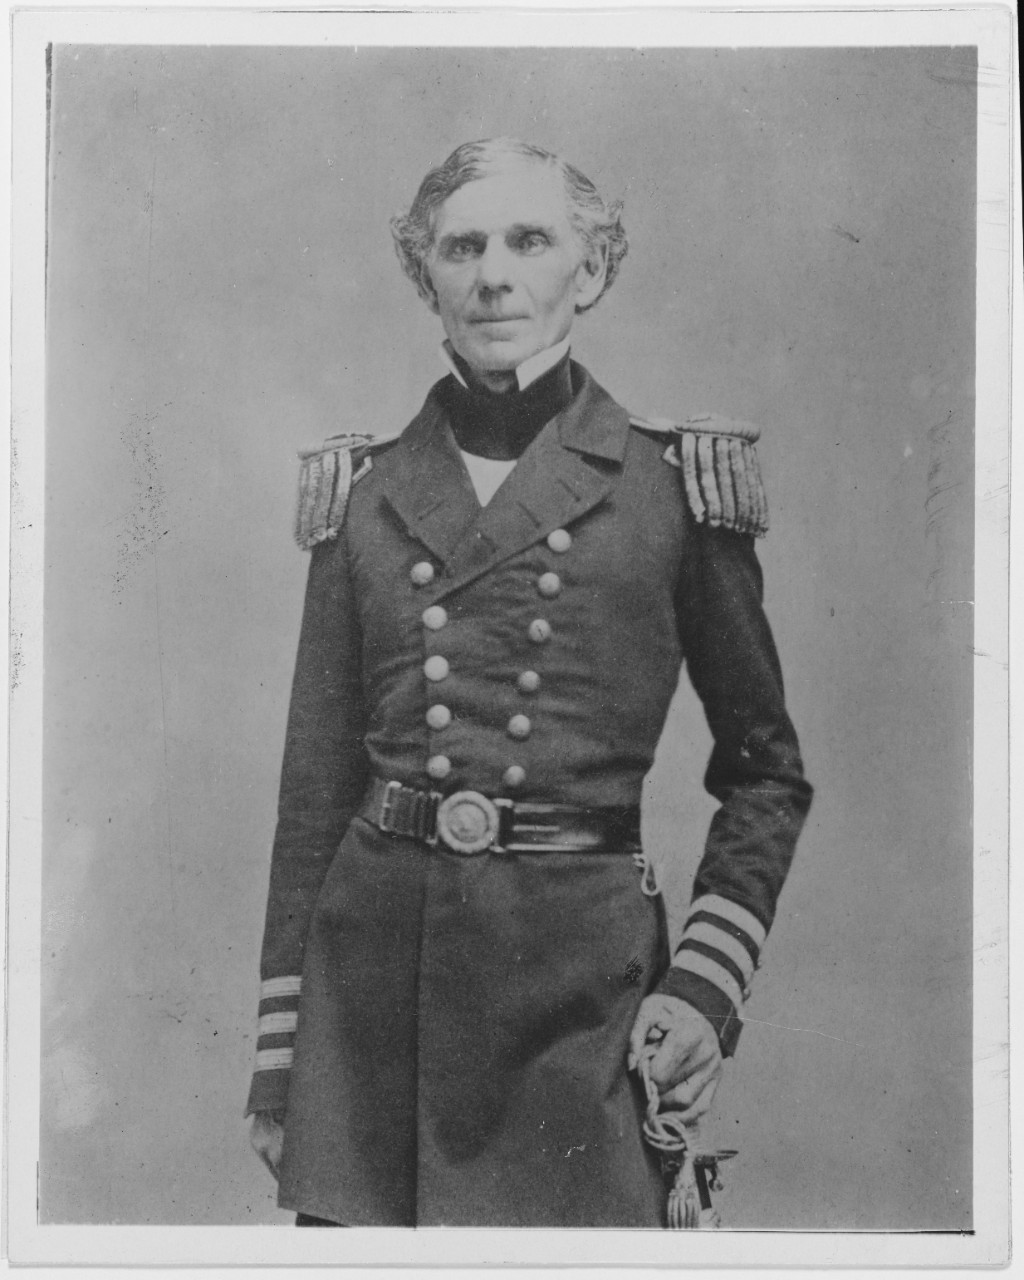 Captain Joseph B. Hull, USN, circa 1855.